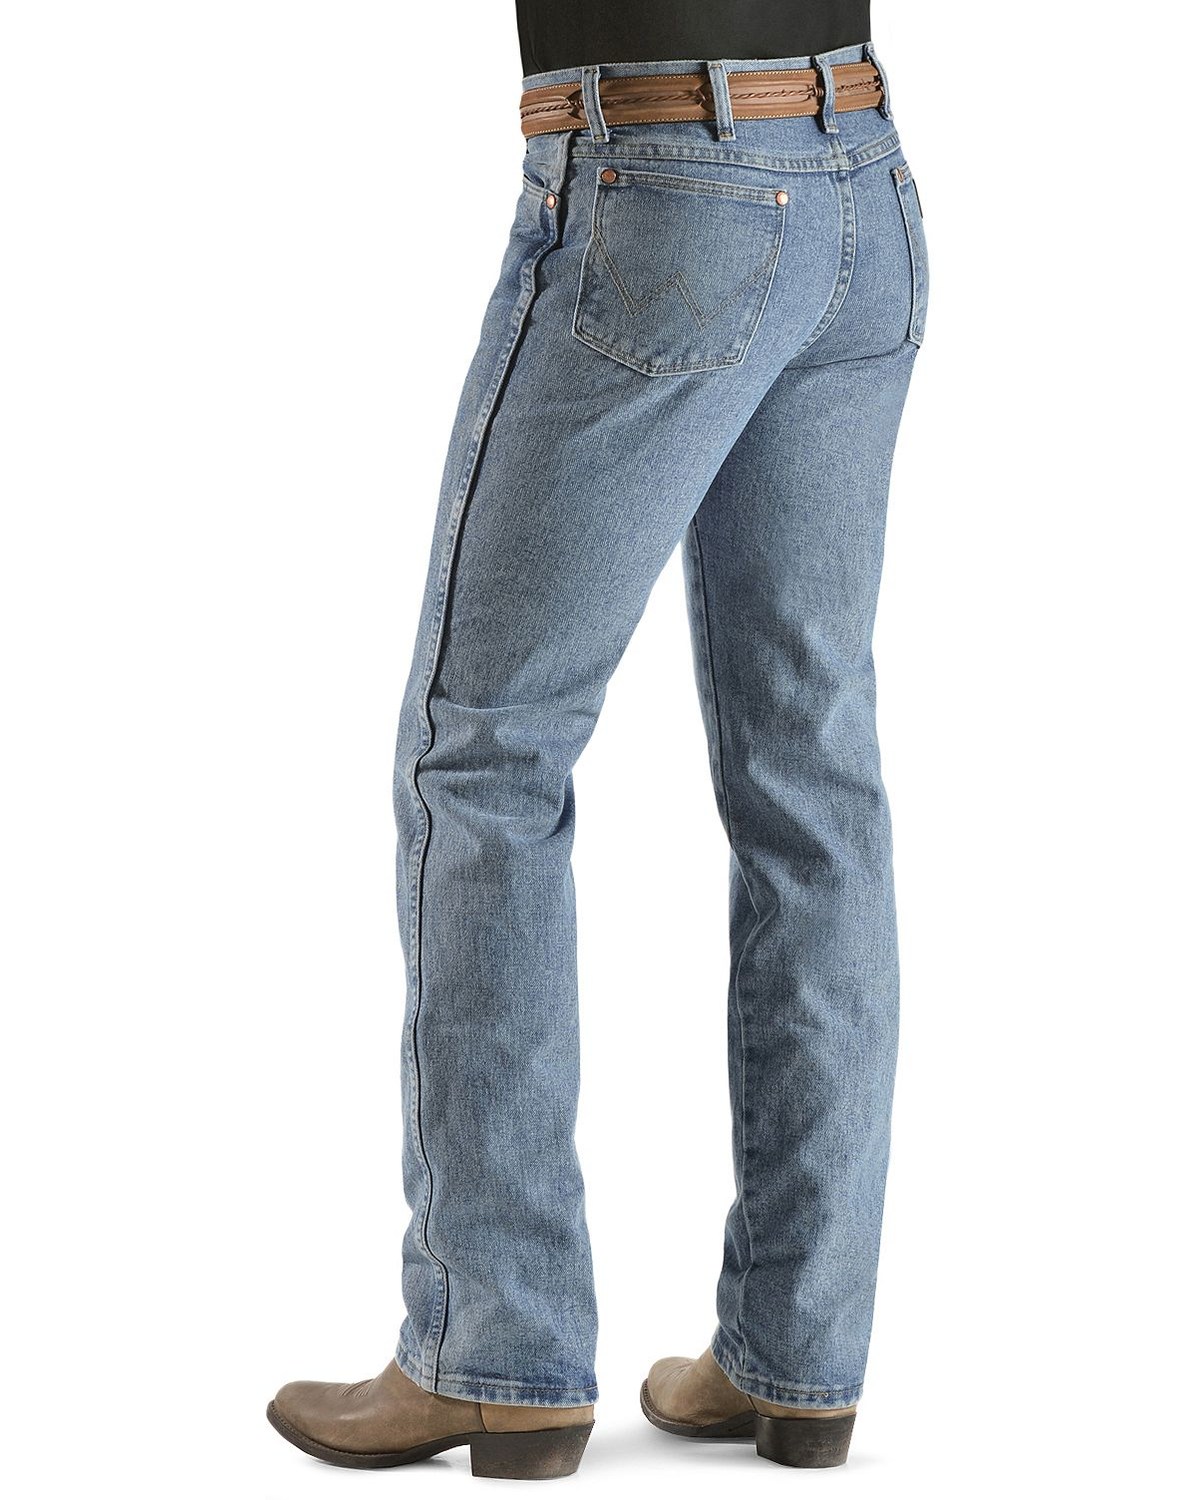 Wrangler 936 Cowboy Cut Slim Fit Prewashed Jeans